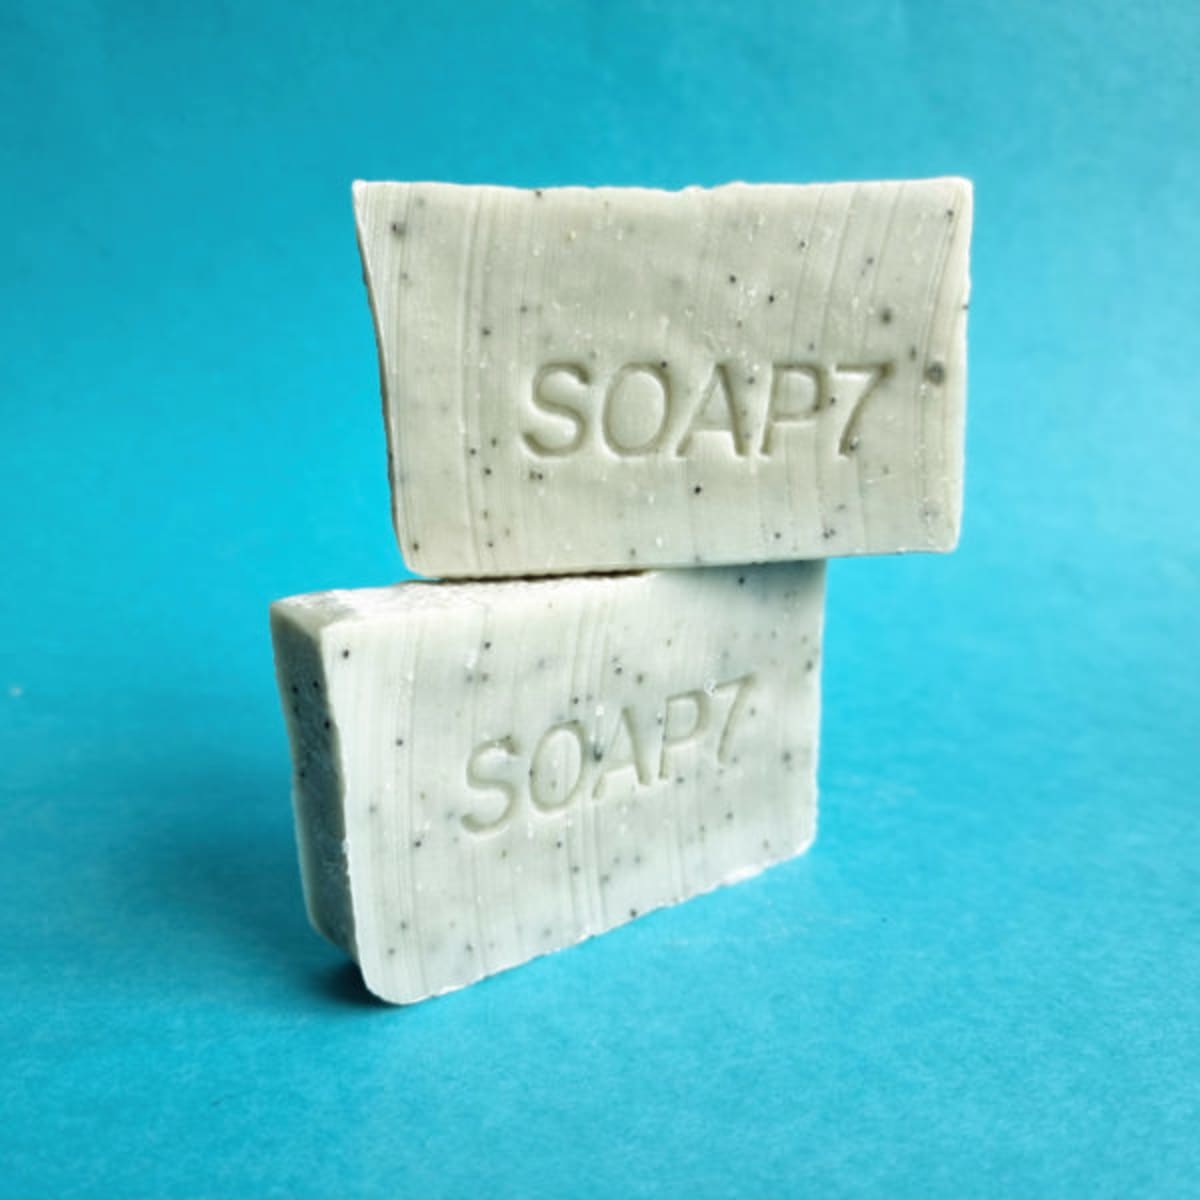 SOAP7 Green & Clean